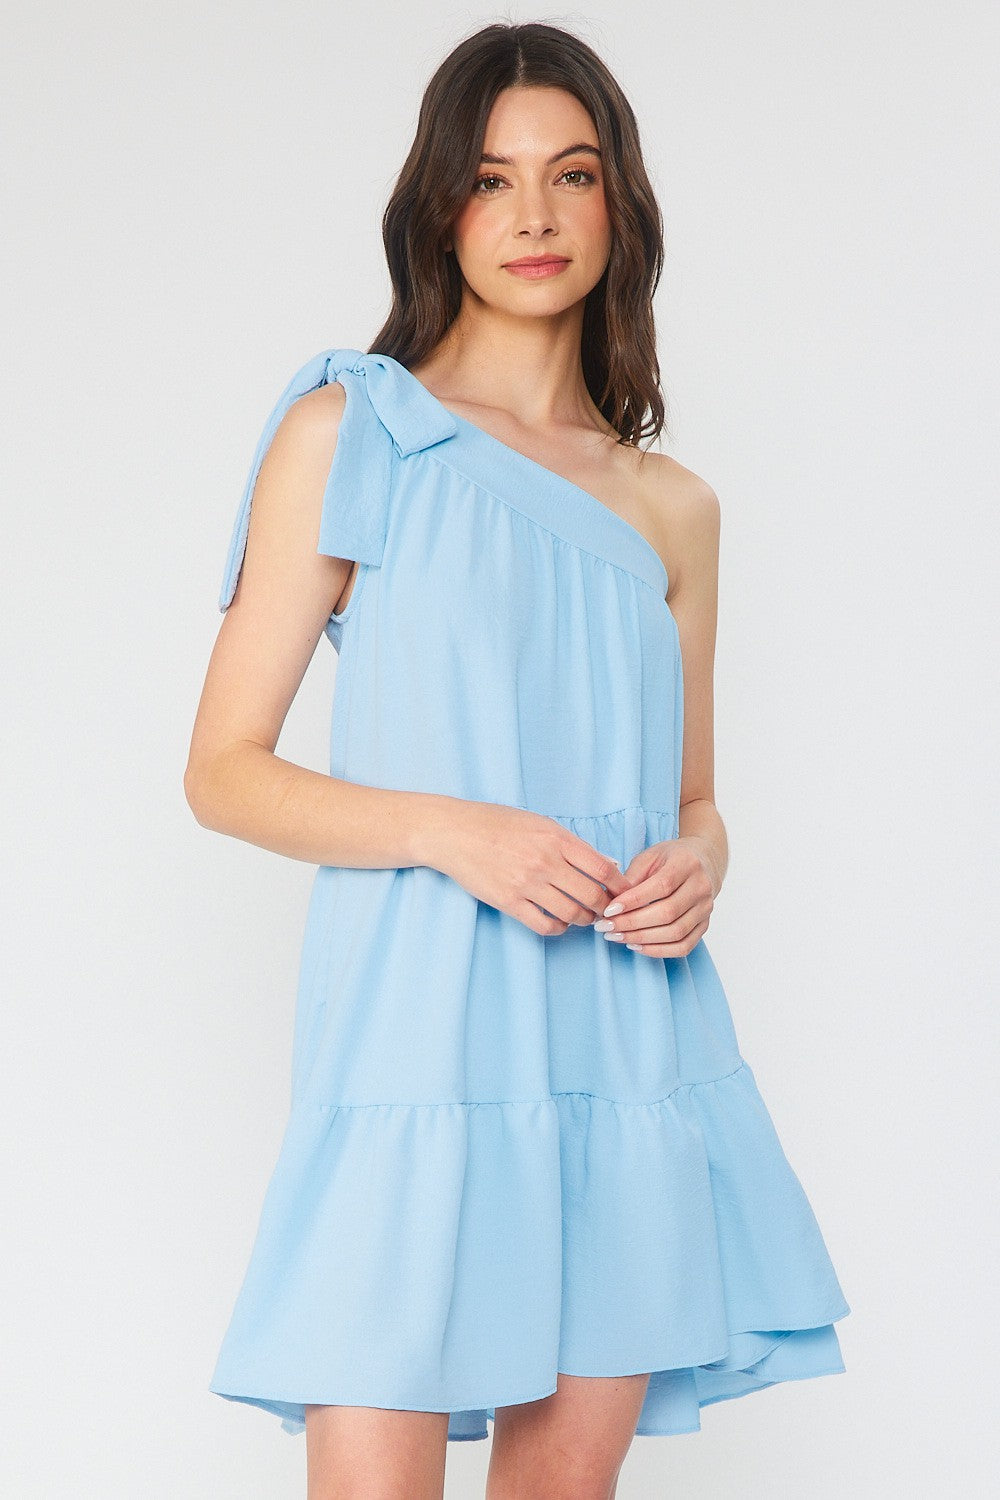 Light Blue Tiered Babydoll Dress